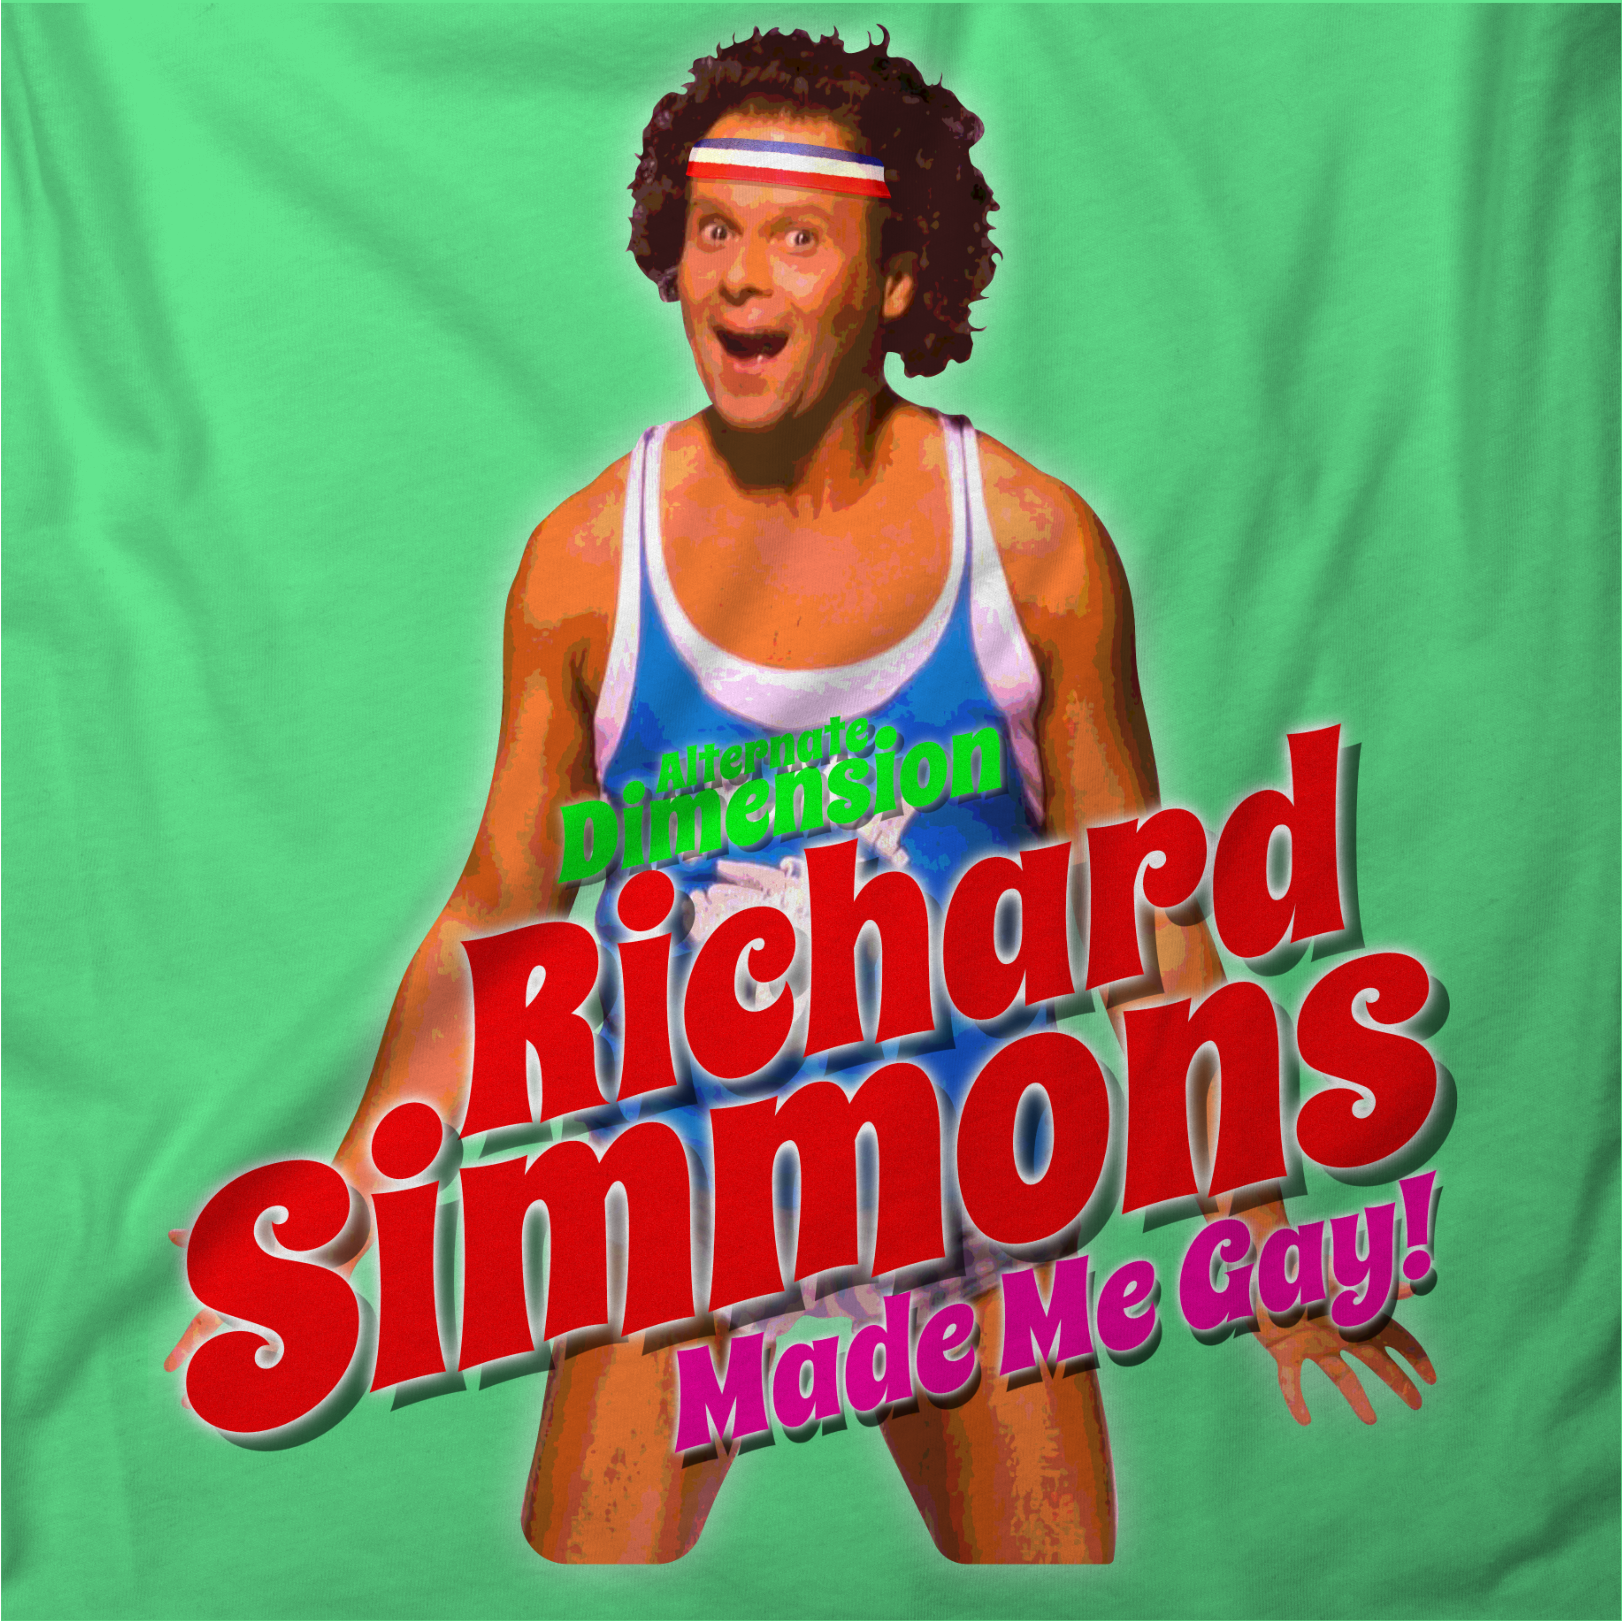 Alternate Dimension Richard Simmons Made Me Gay